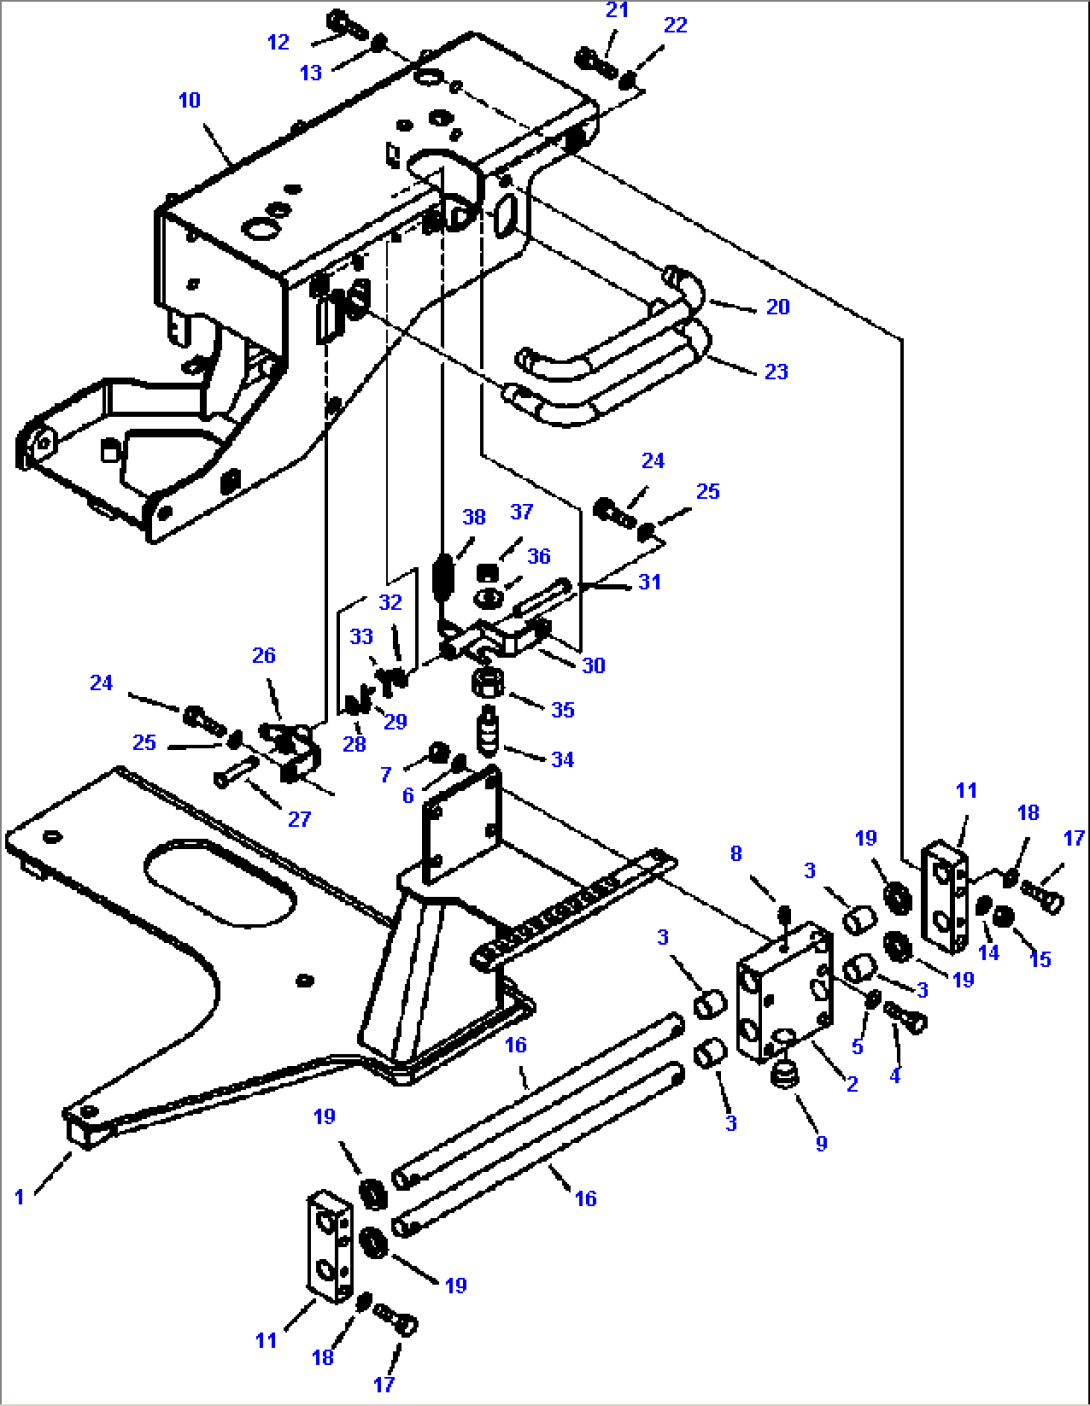 K0110-06A0 OPERATOR SEAT CONSOLE (JOYSTICK STEERING) (1/2)